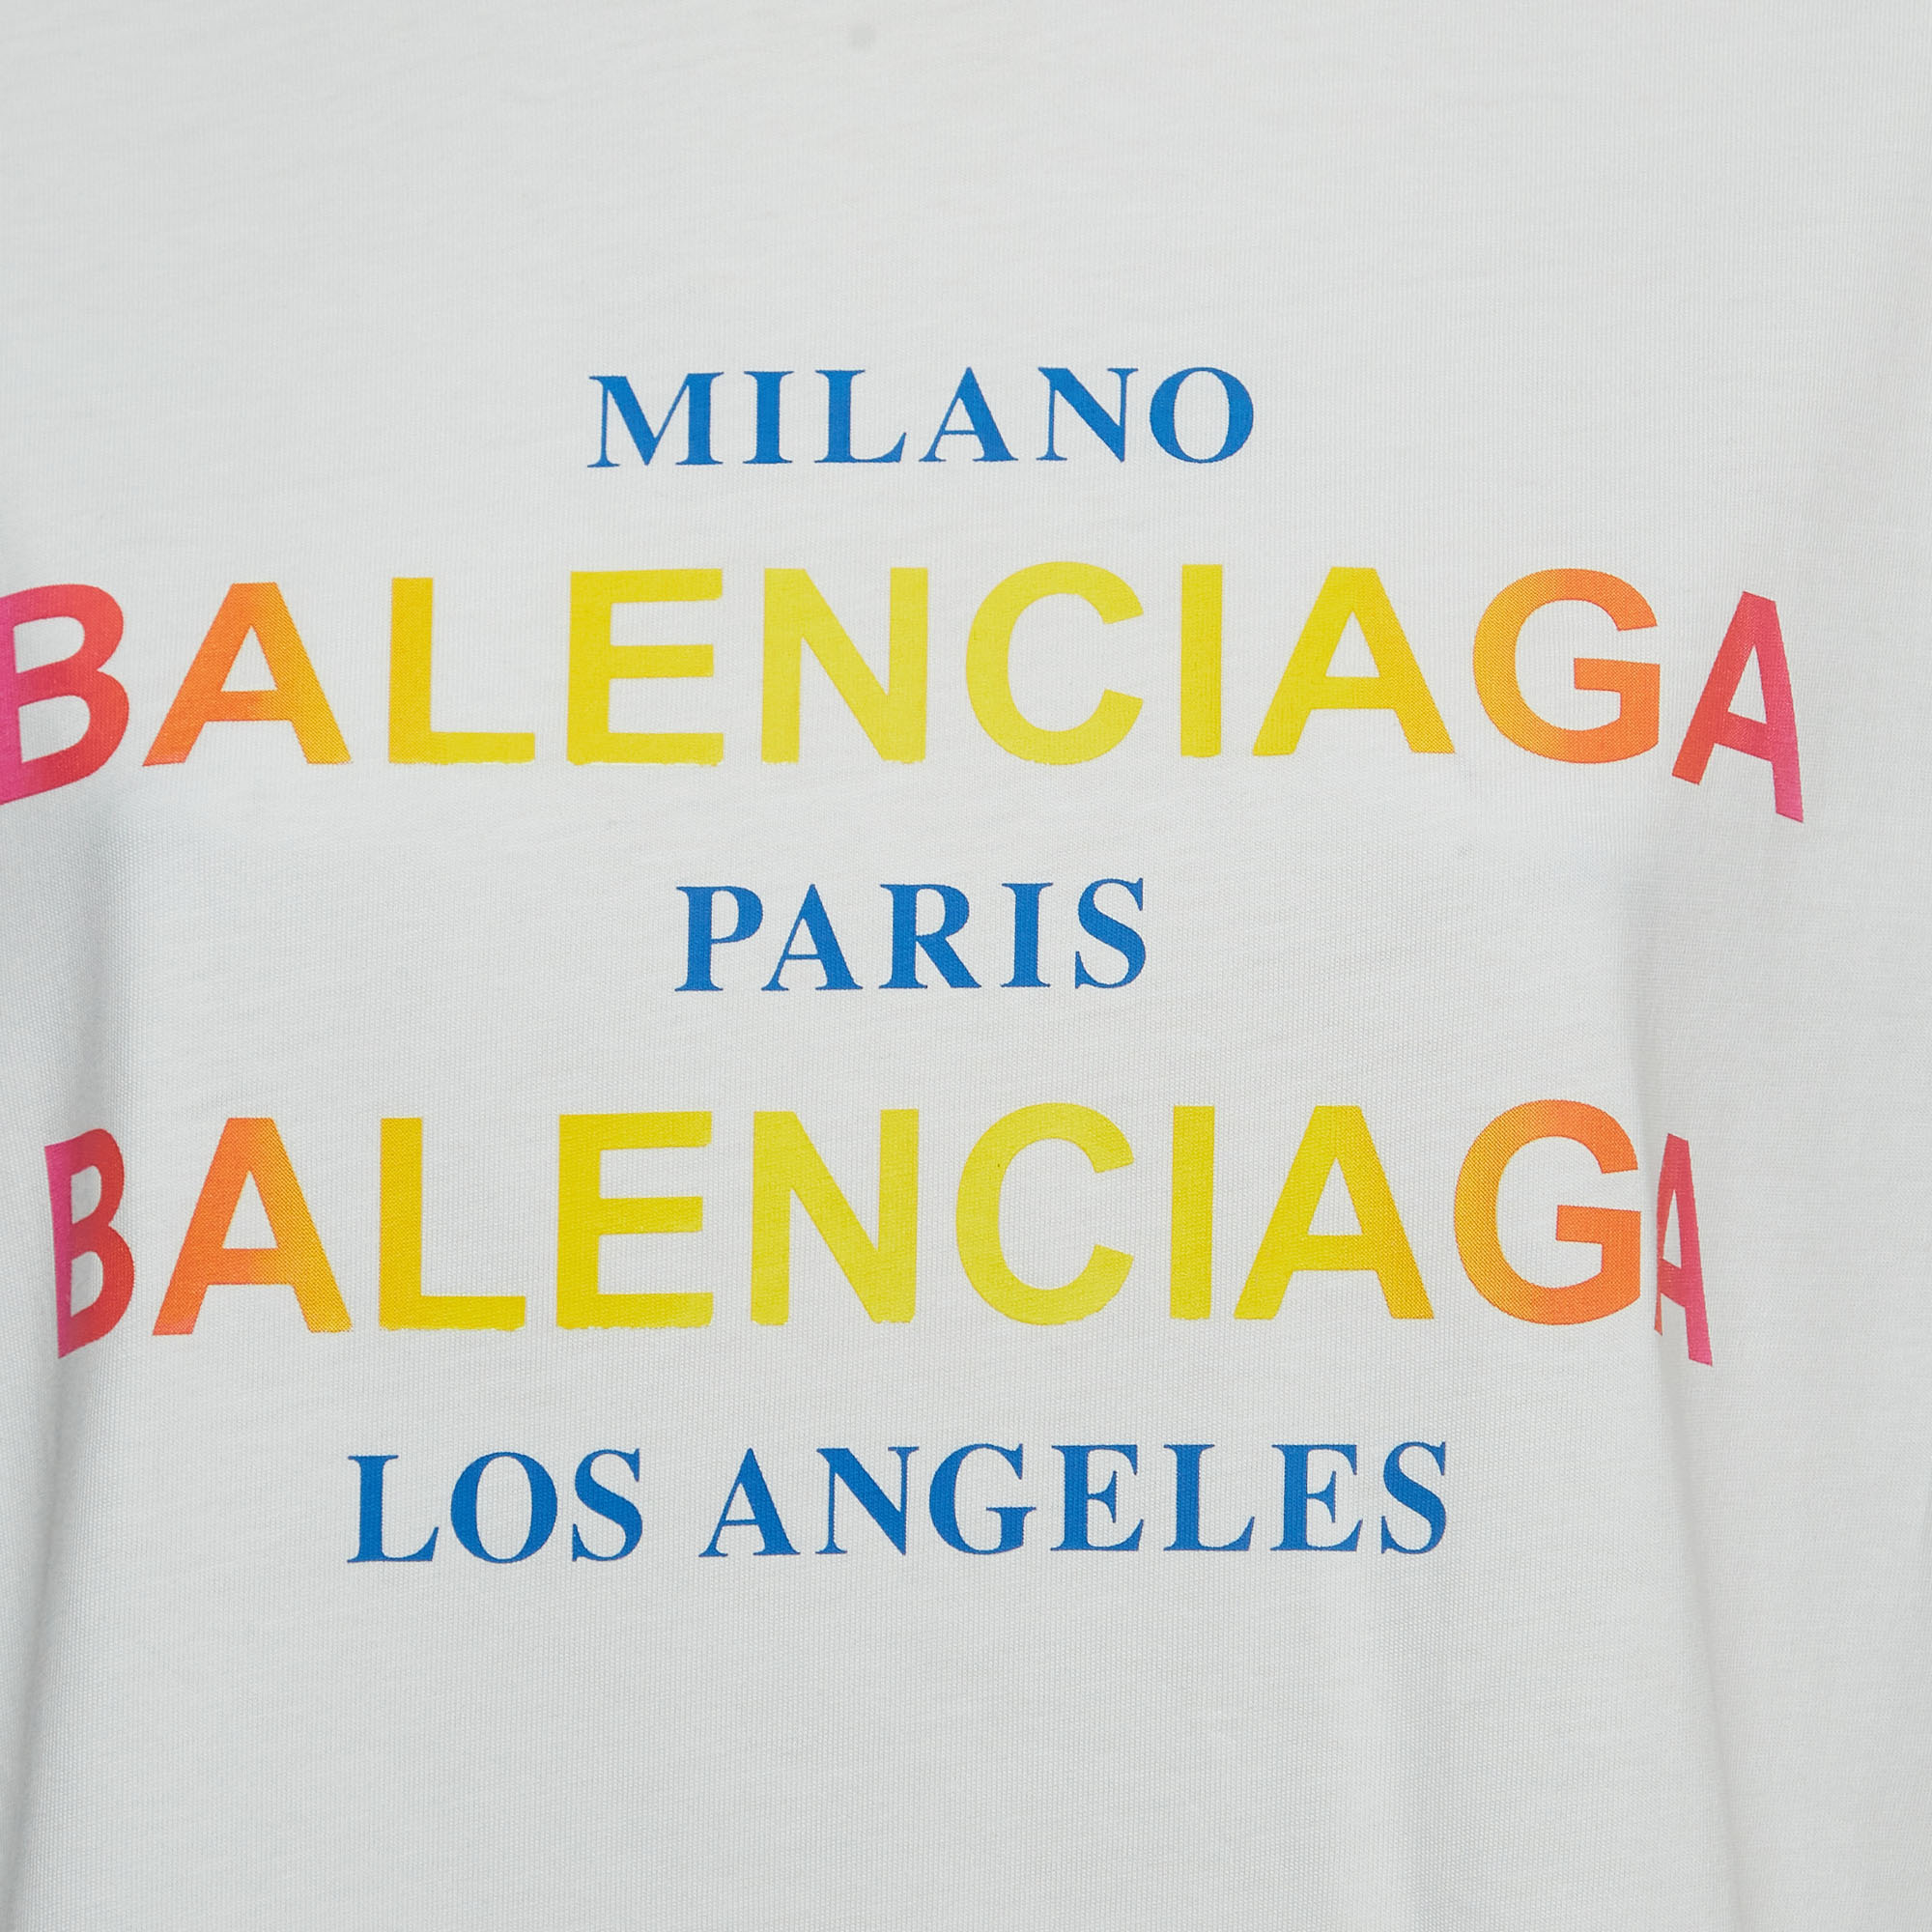 Balenciaga White Cities Logo Print T-Shirt XS